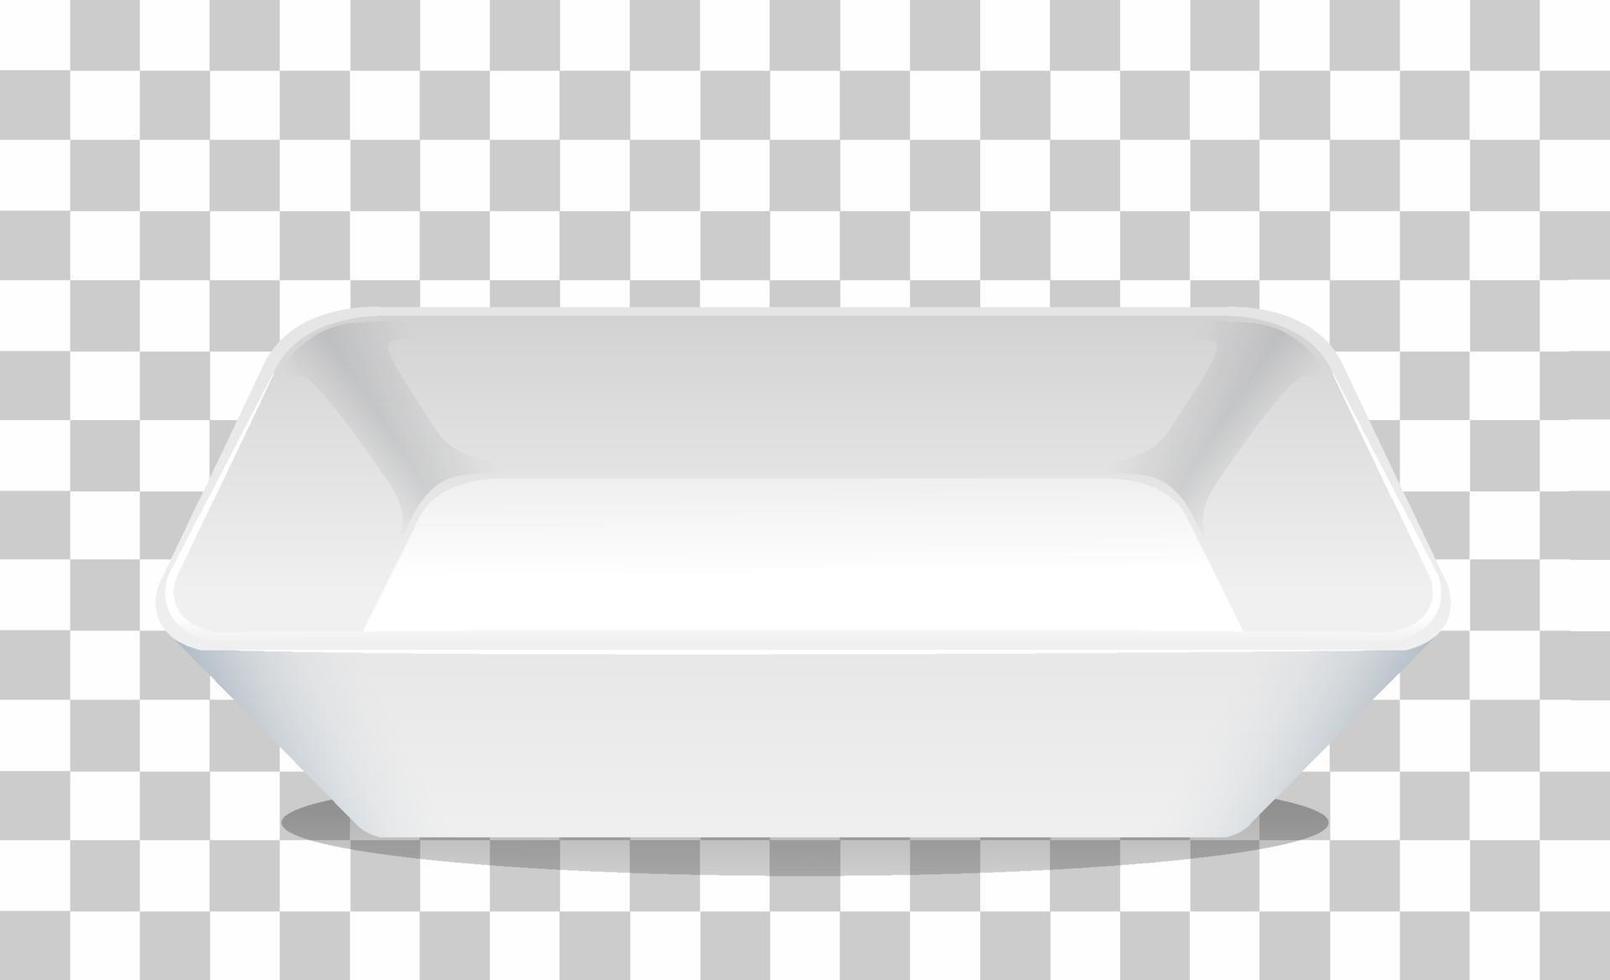 White plain plate on grid background vector